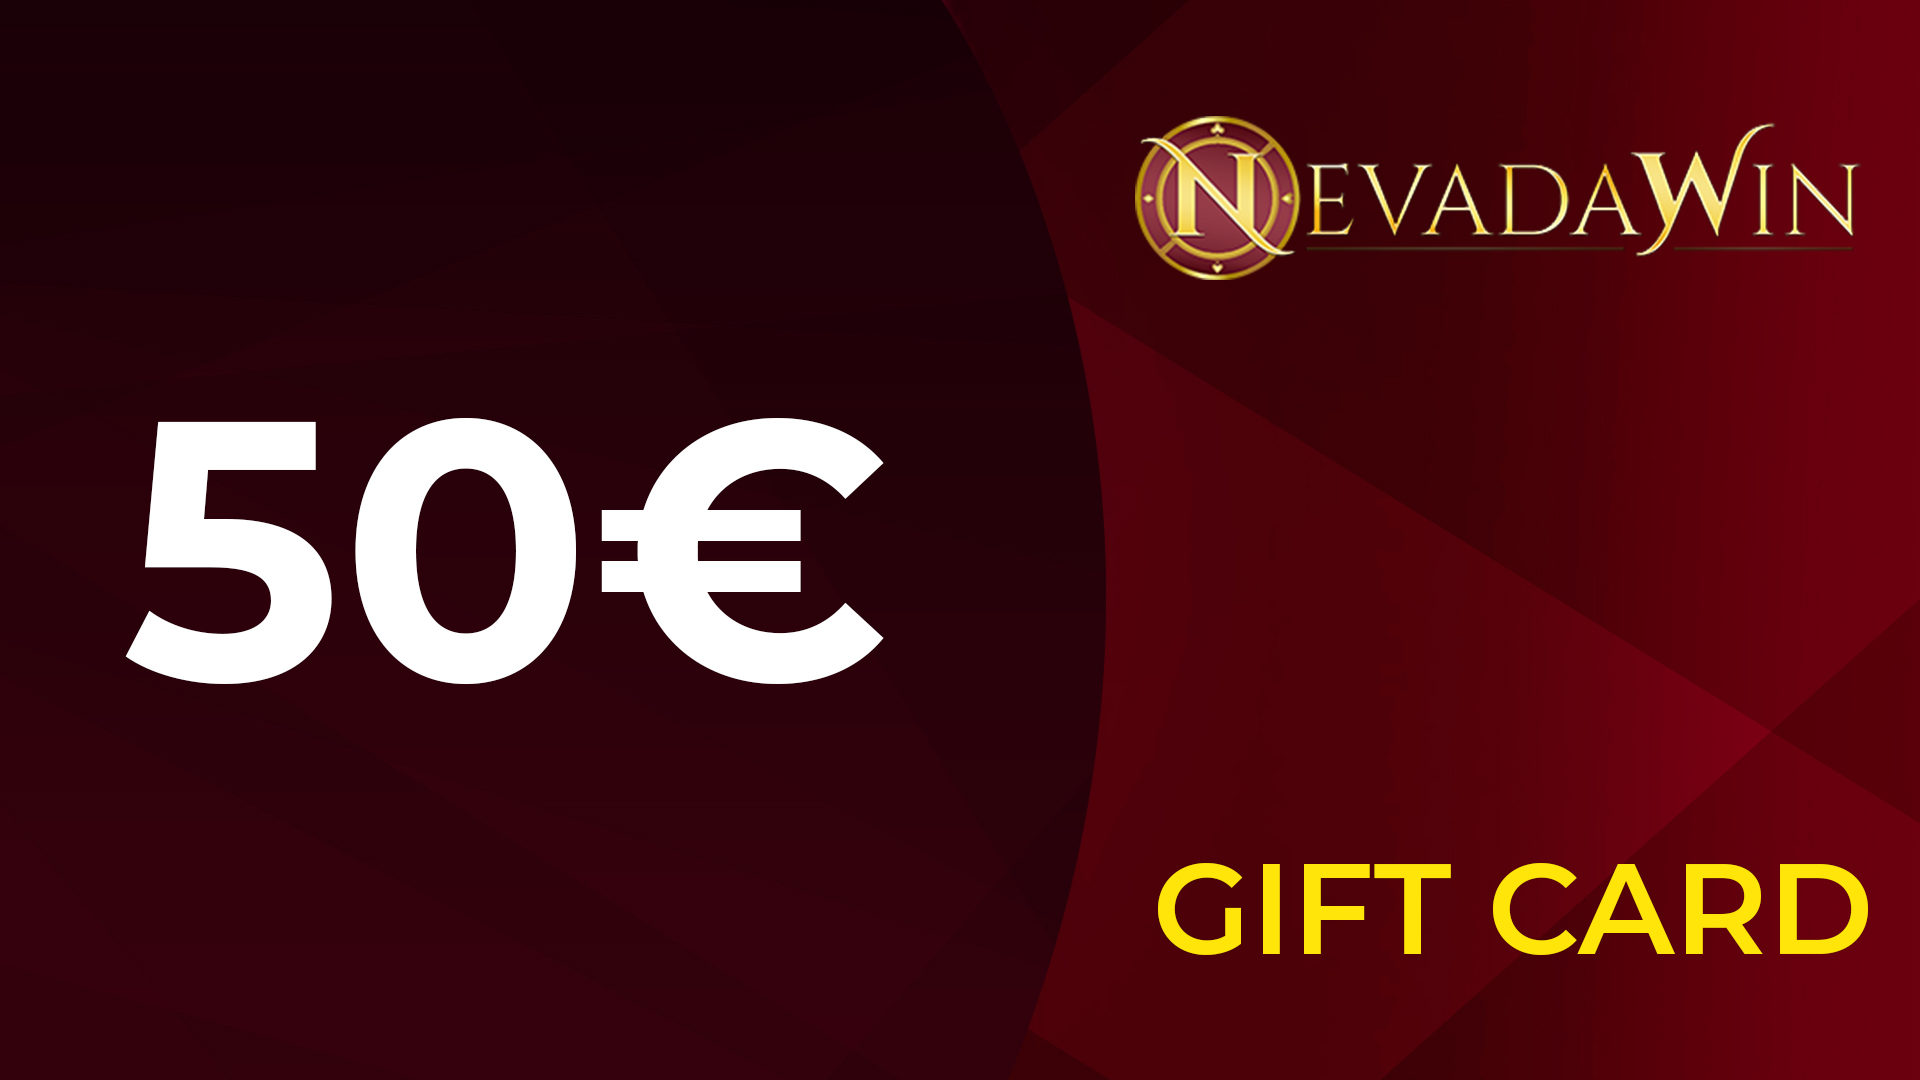 NevadaWin €50 Giftcard